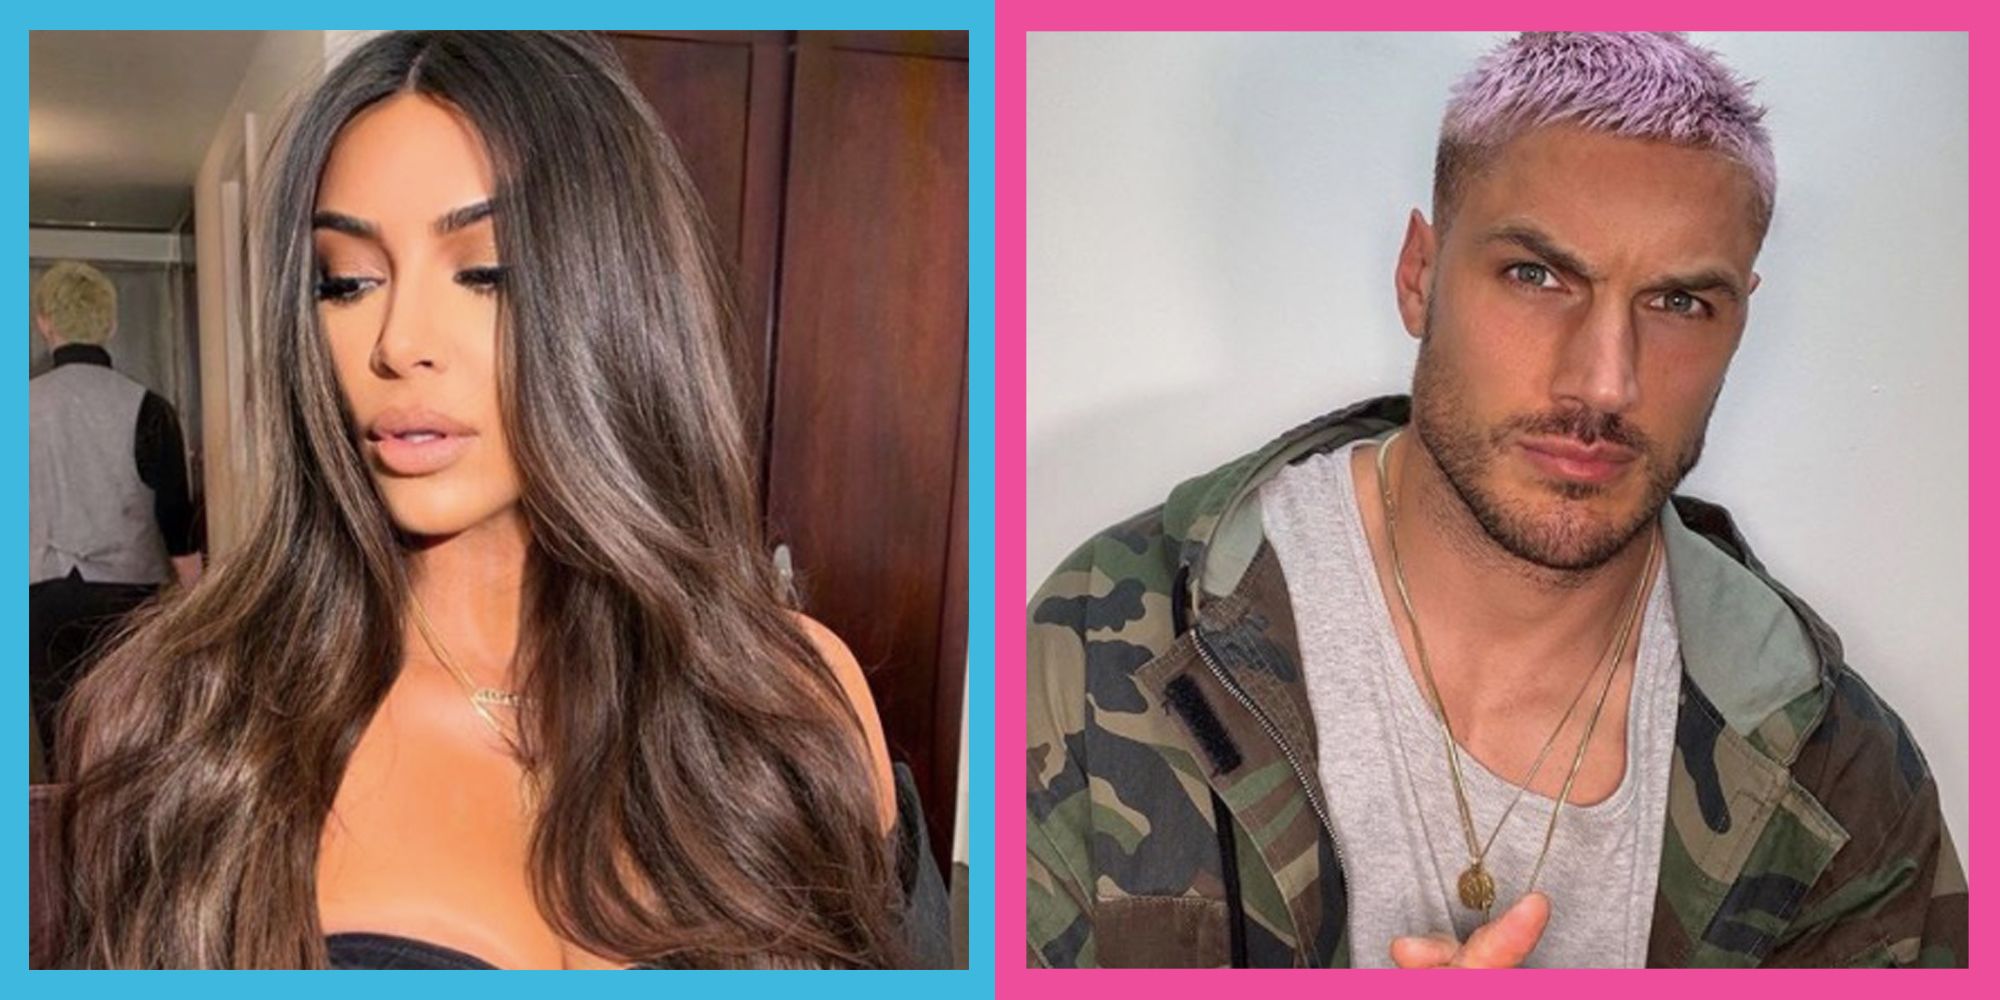 How to hide greasy hair according to Kim Kardashian's stylist, Chris  Appleton